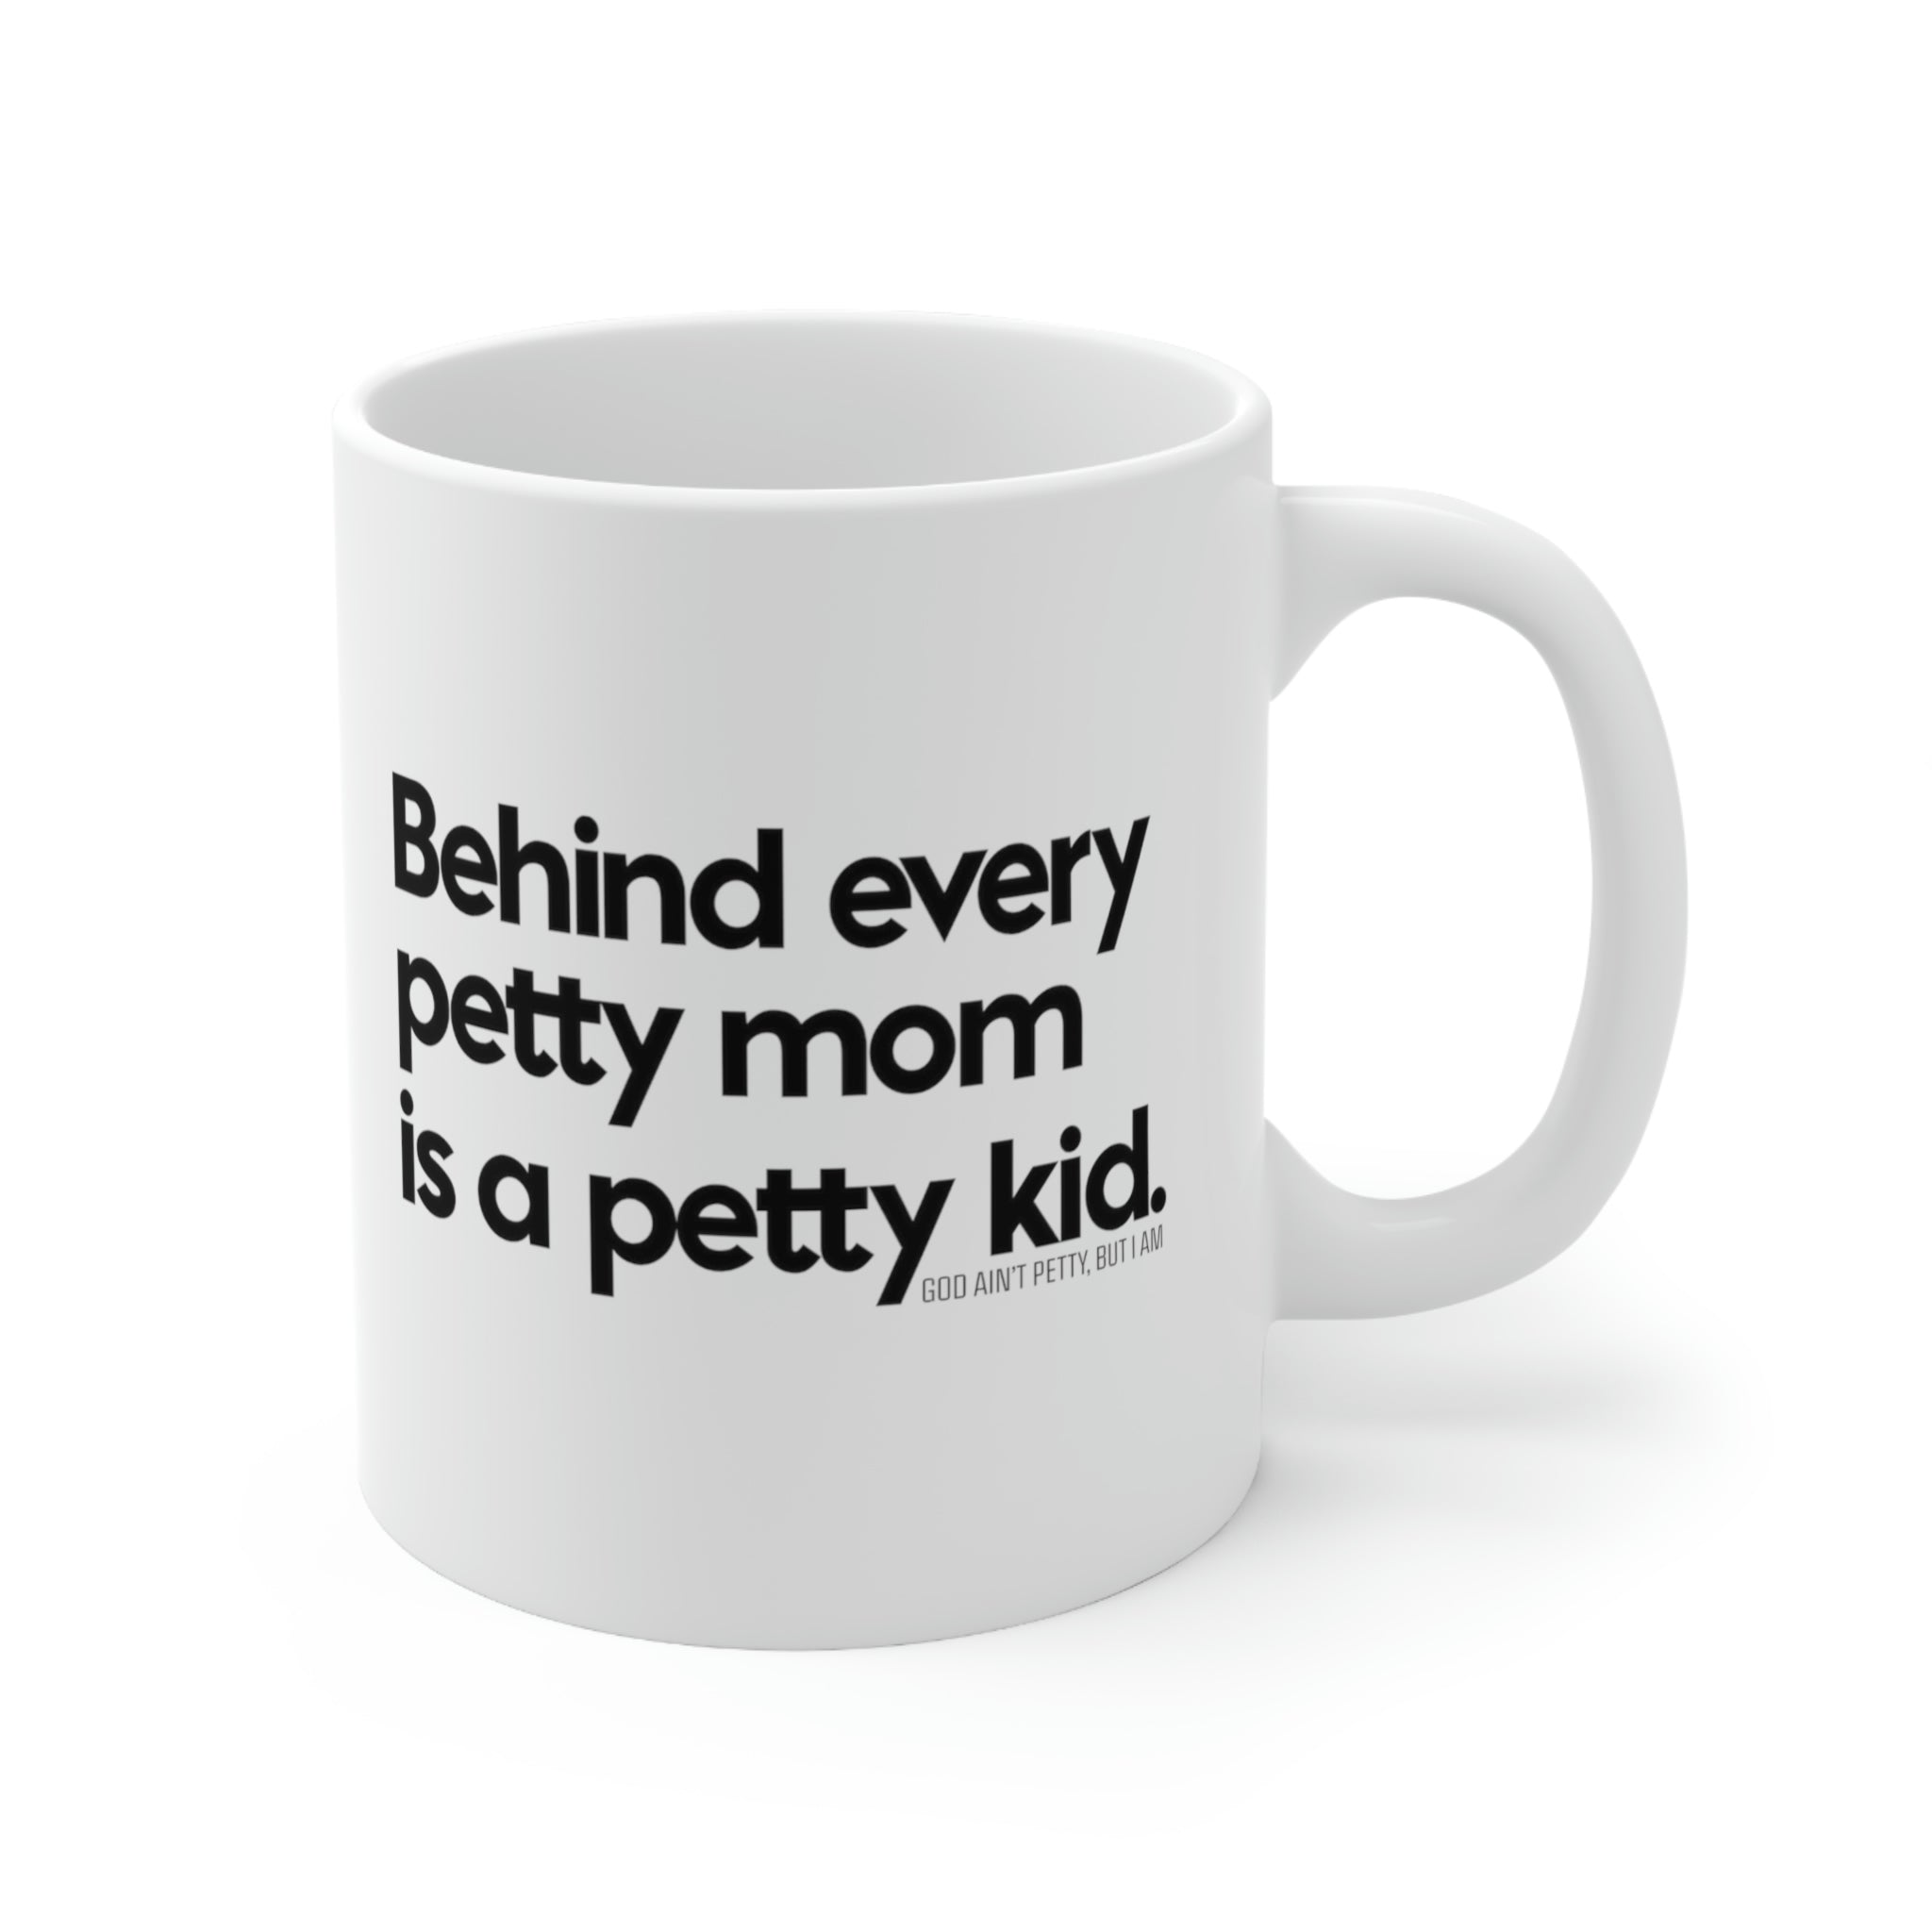 Behind every petty mom is a petty kid Mug 11oz (White/Black)-Mug-The Original God Ain't Petty But I Am